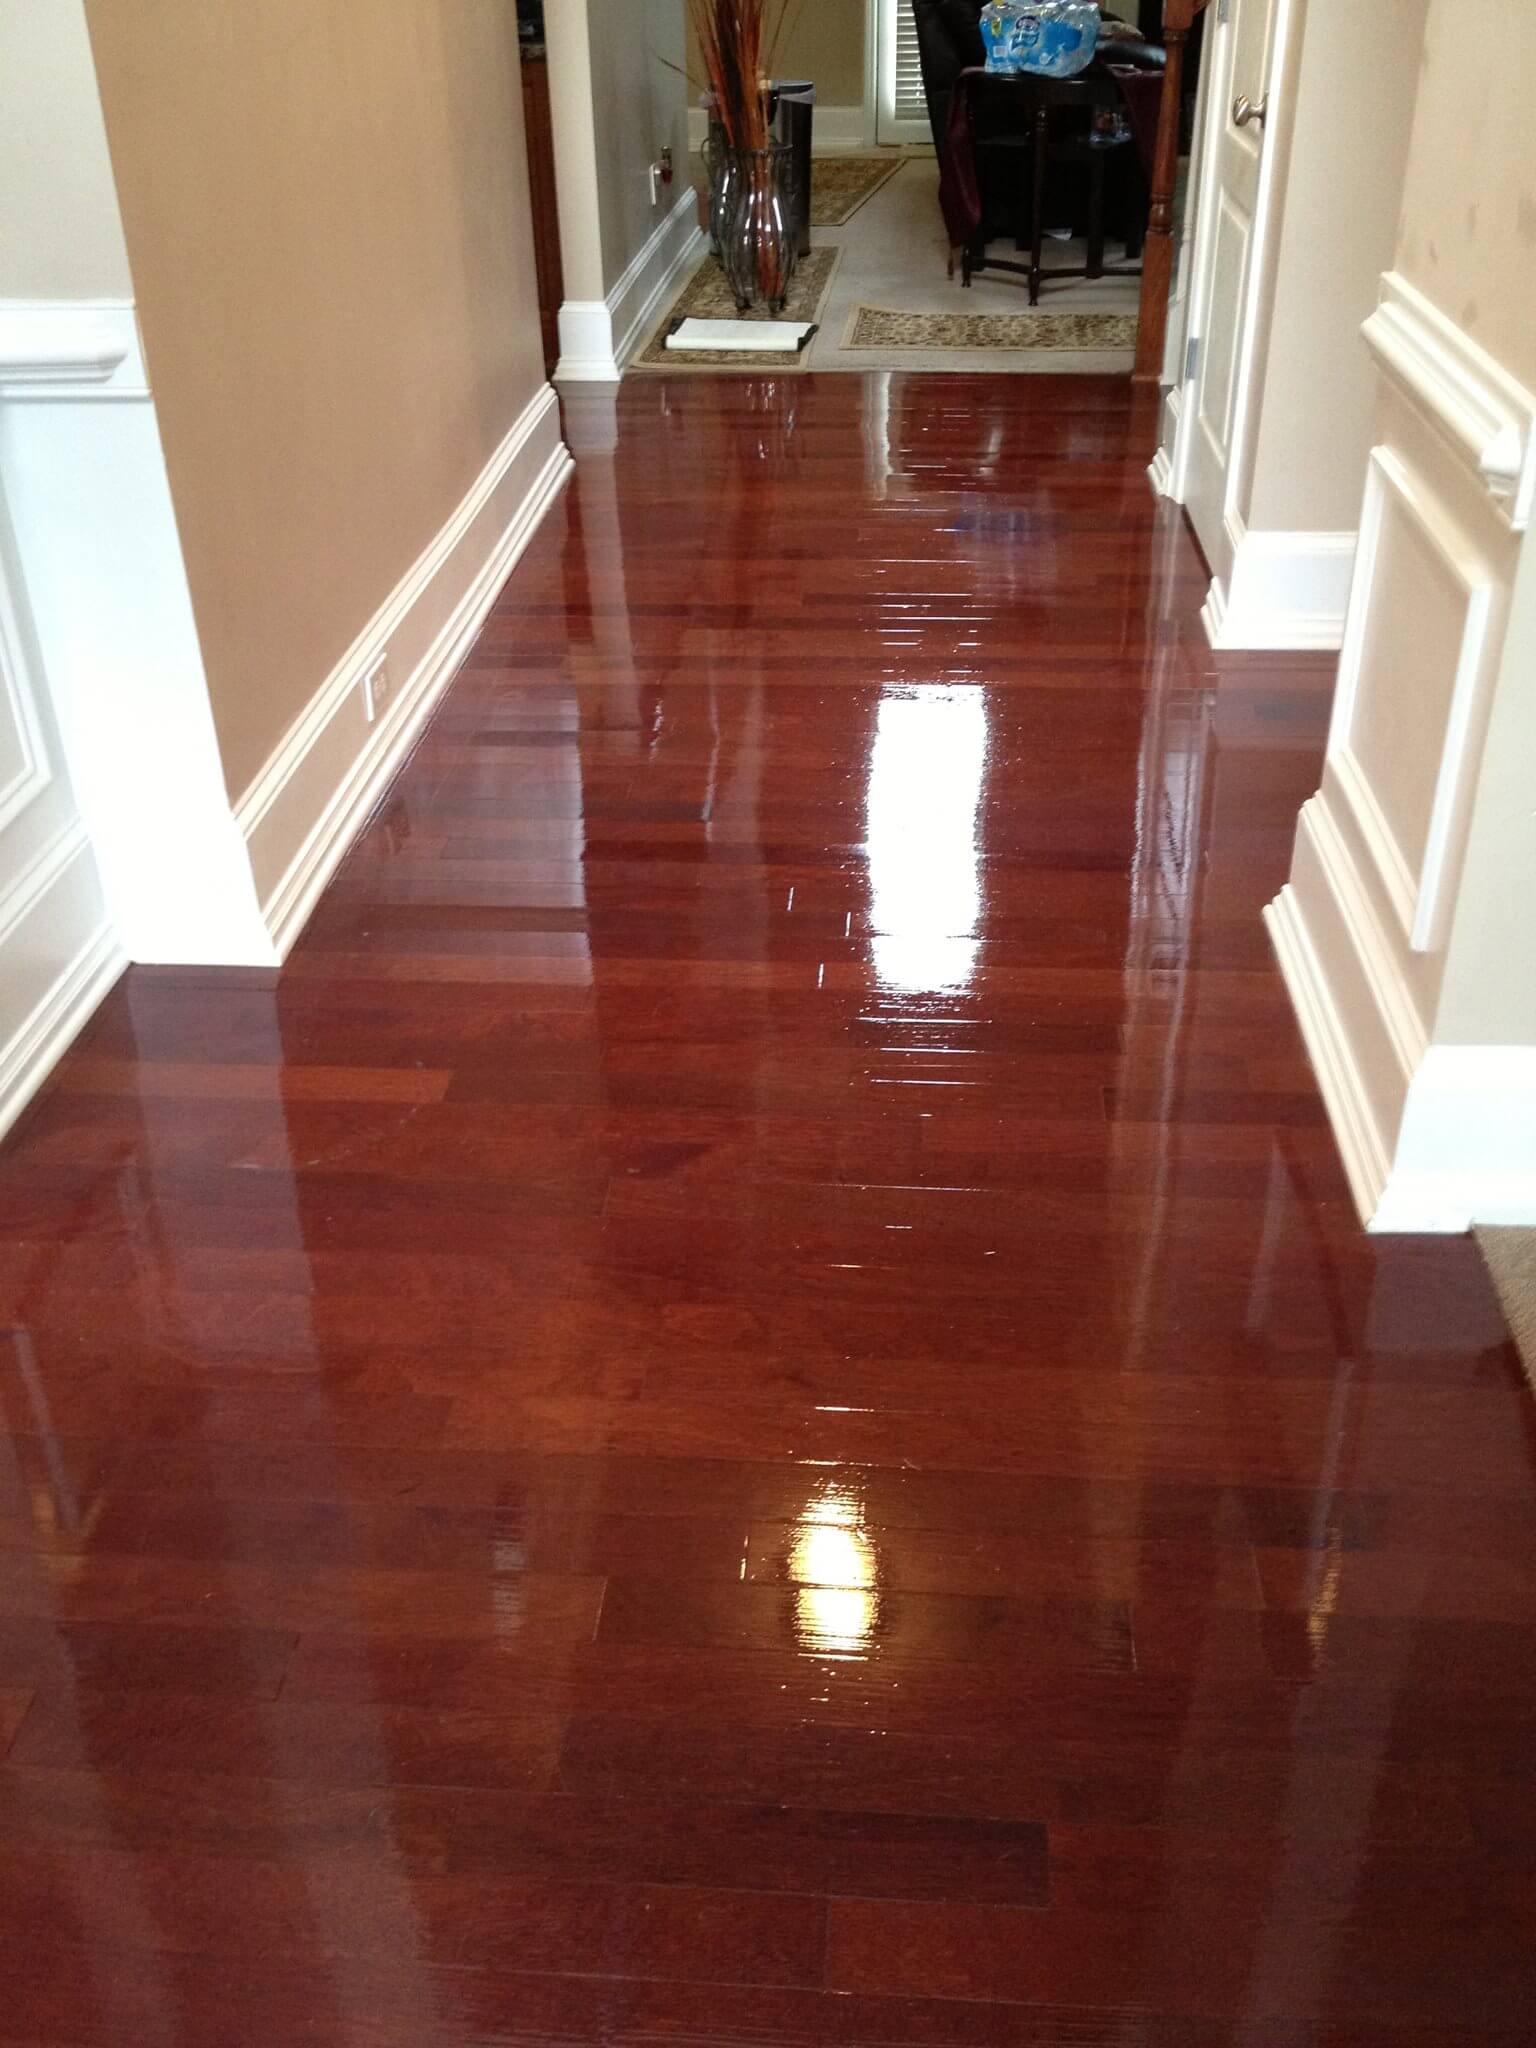 a refinished hardwood floor